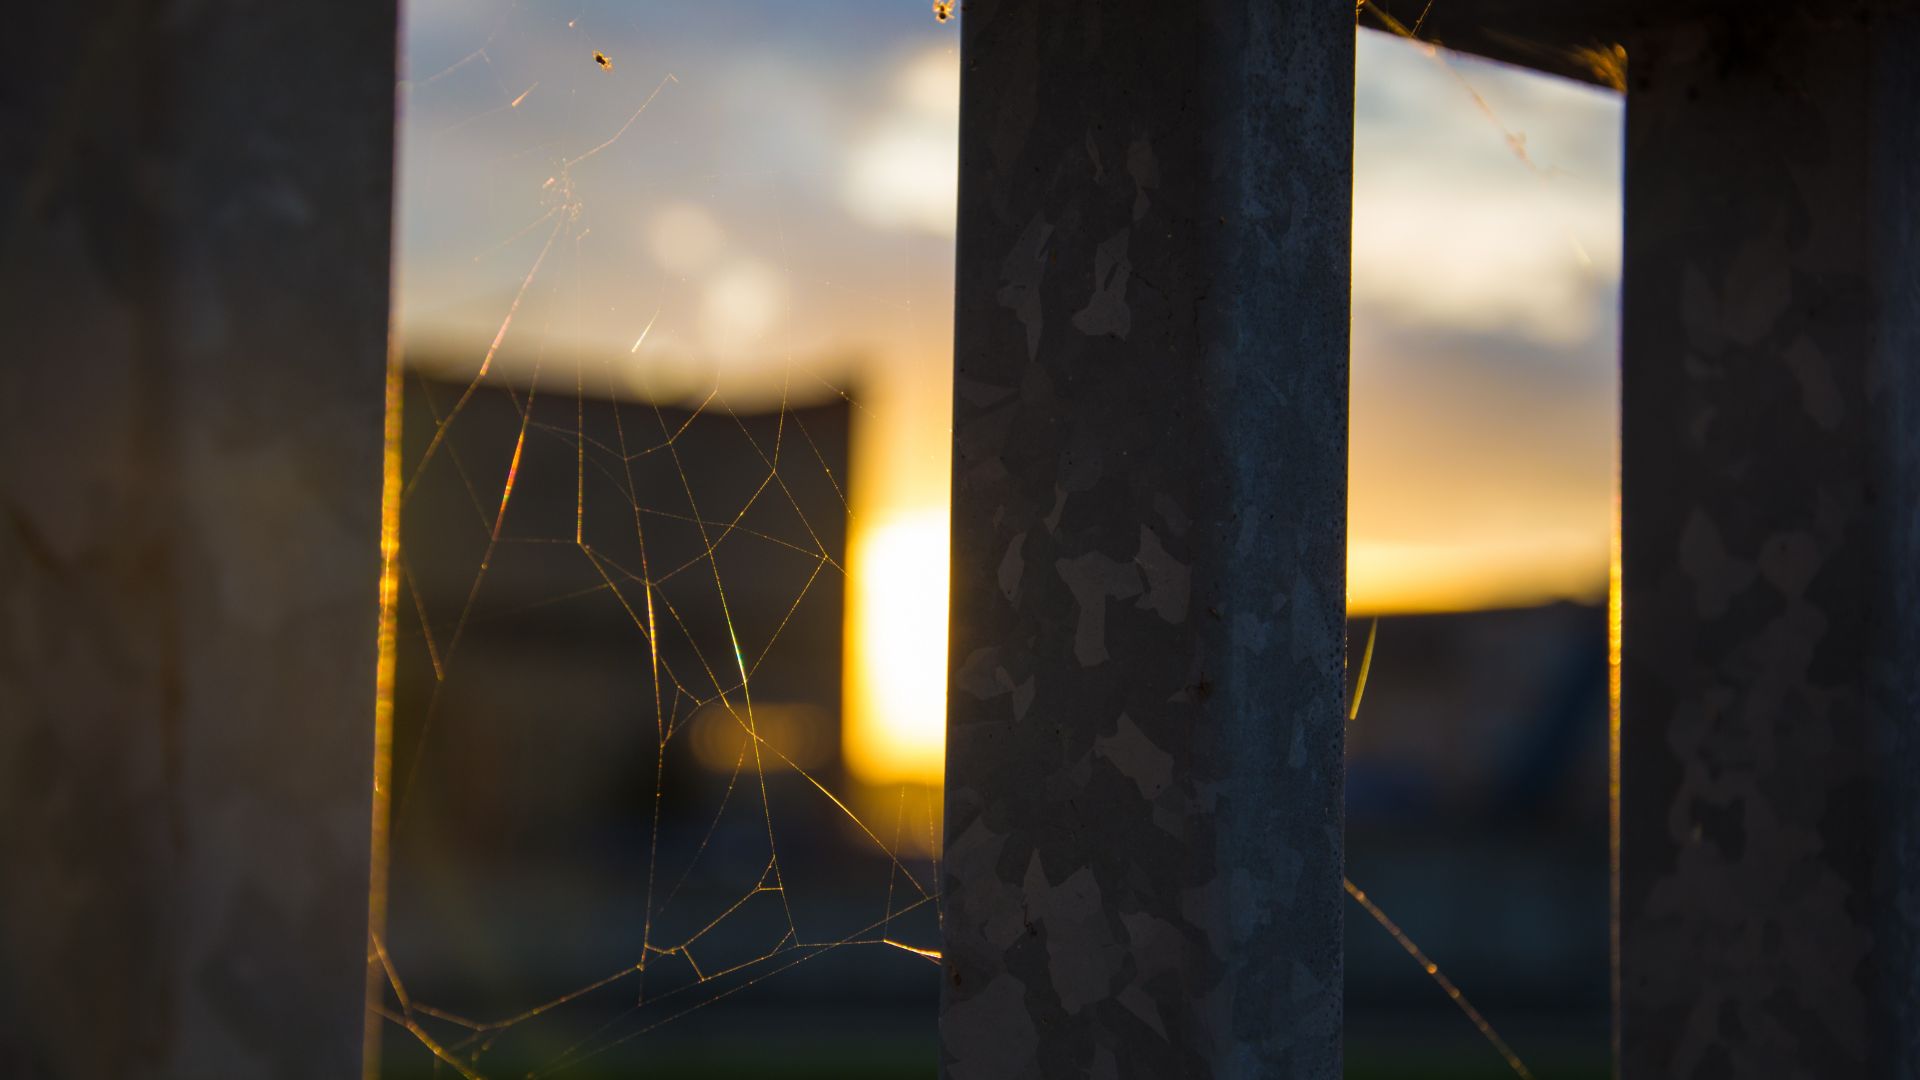 Wallpaper Spider web in window